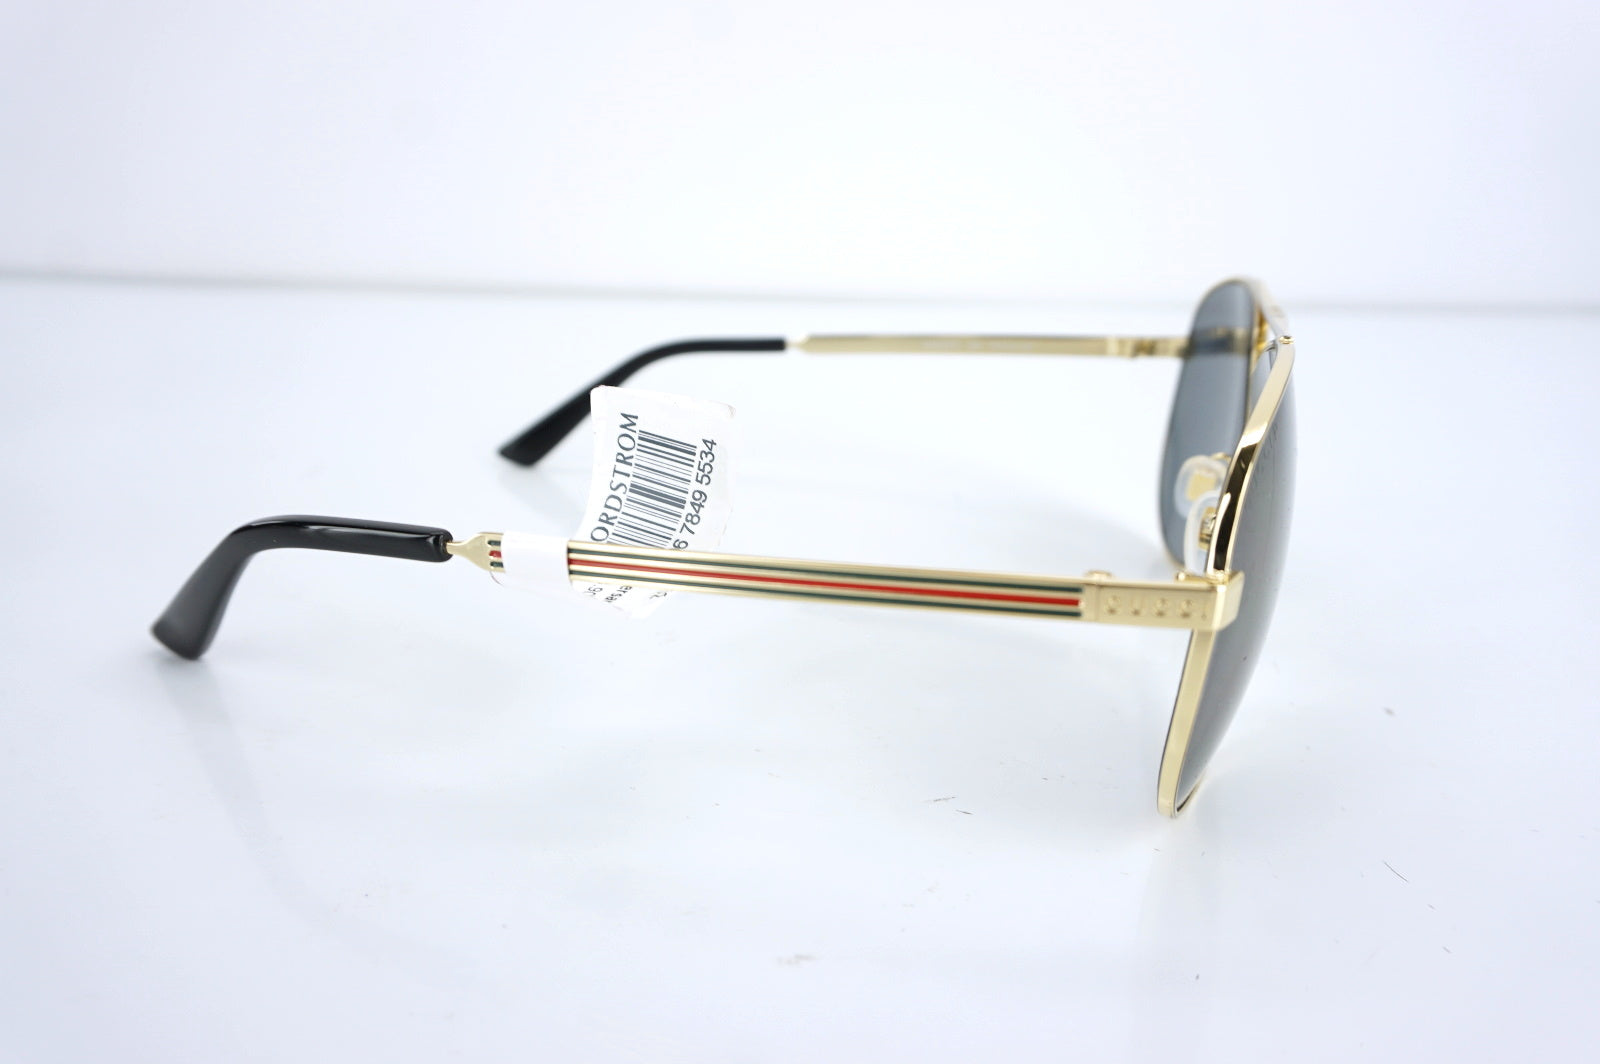 Gucci Aviator Sunglasses GG 0237/S $455 New Metal Gold Gunmetal Flash